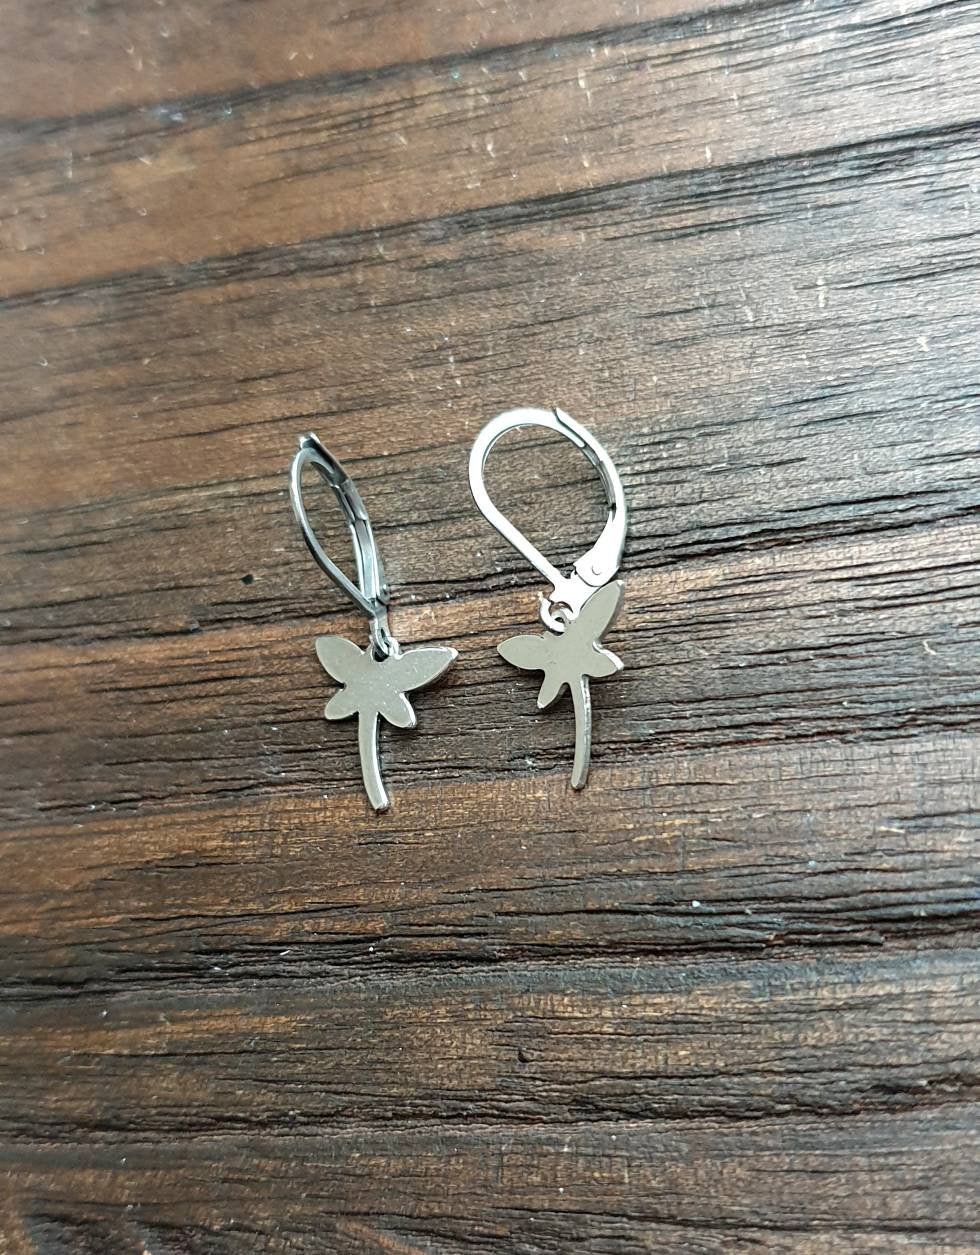 Tiny Dragonfly Leverback Earrings, Stainless Steel Dangle Leverback or Hook Earrings.